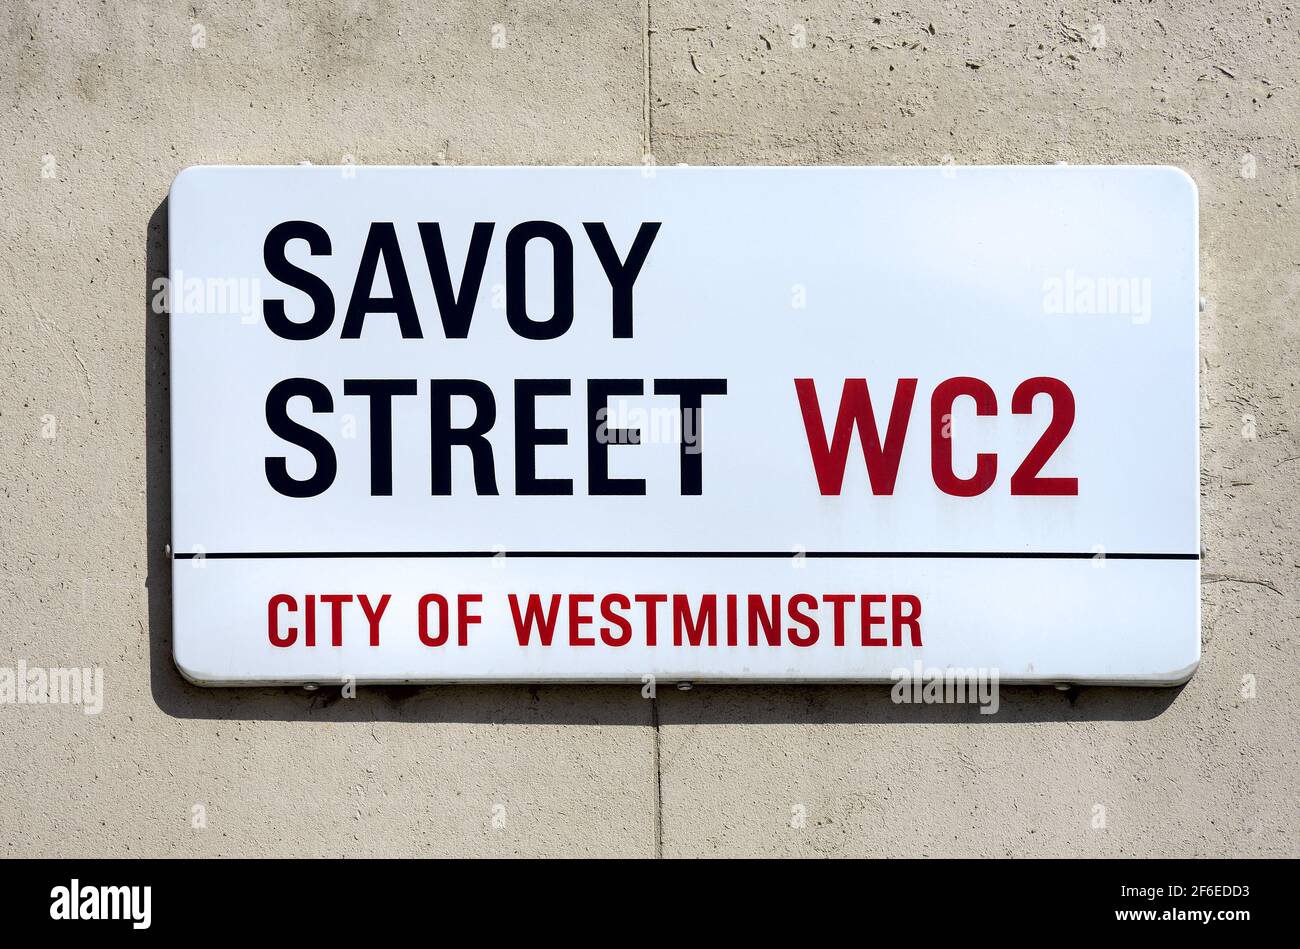 Londra, Inghilterra, Regno Unito. Indicazioni stradali: Savoy Street, WC2, City of Westminster Foto Stock